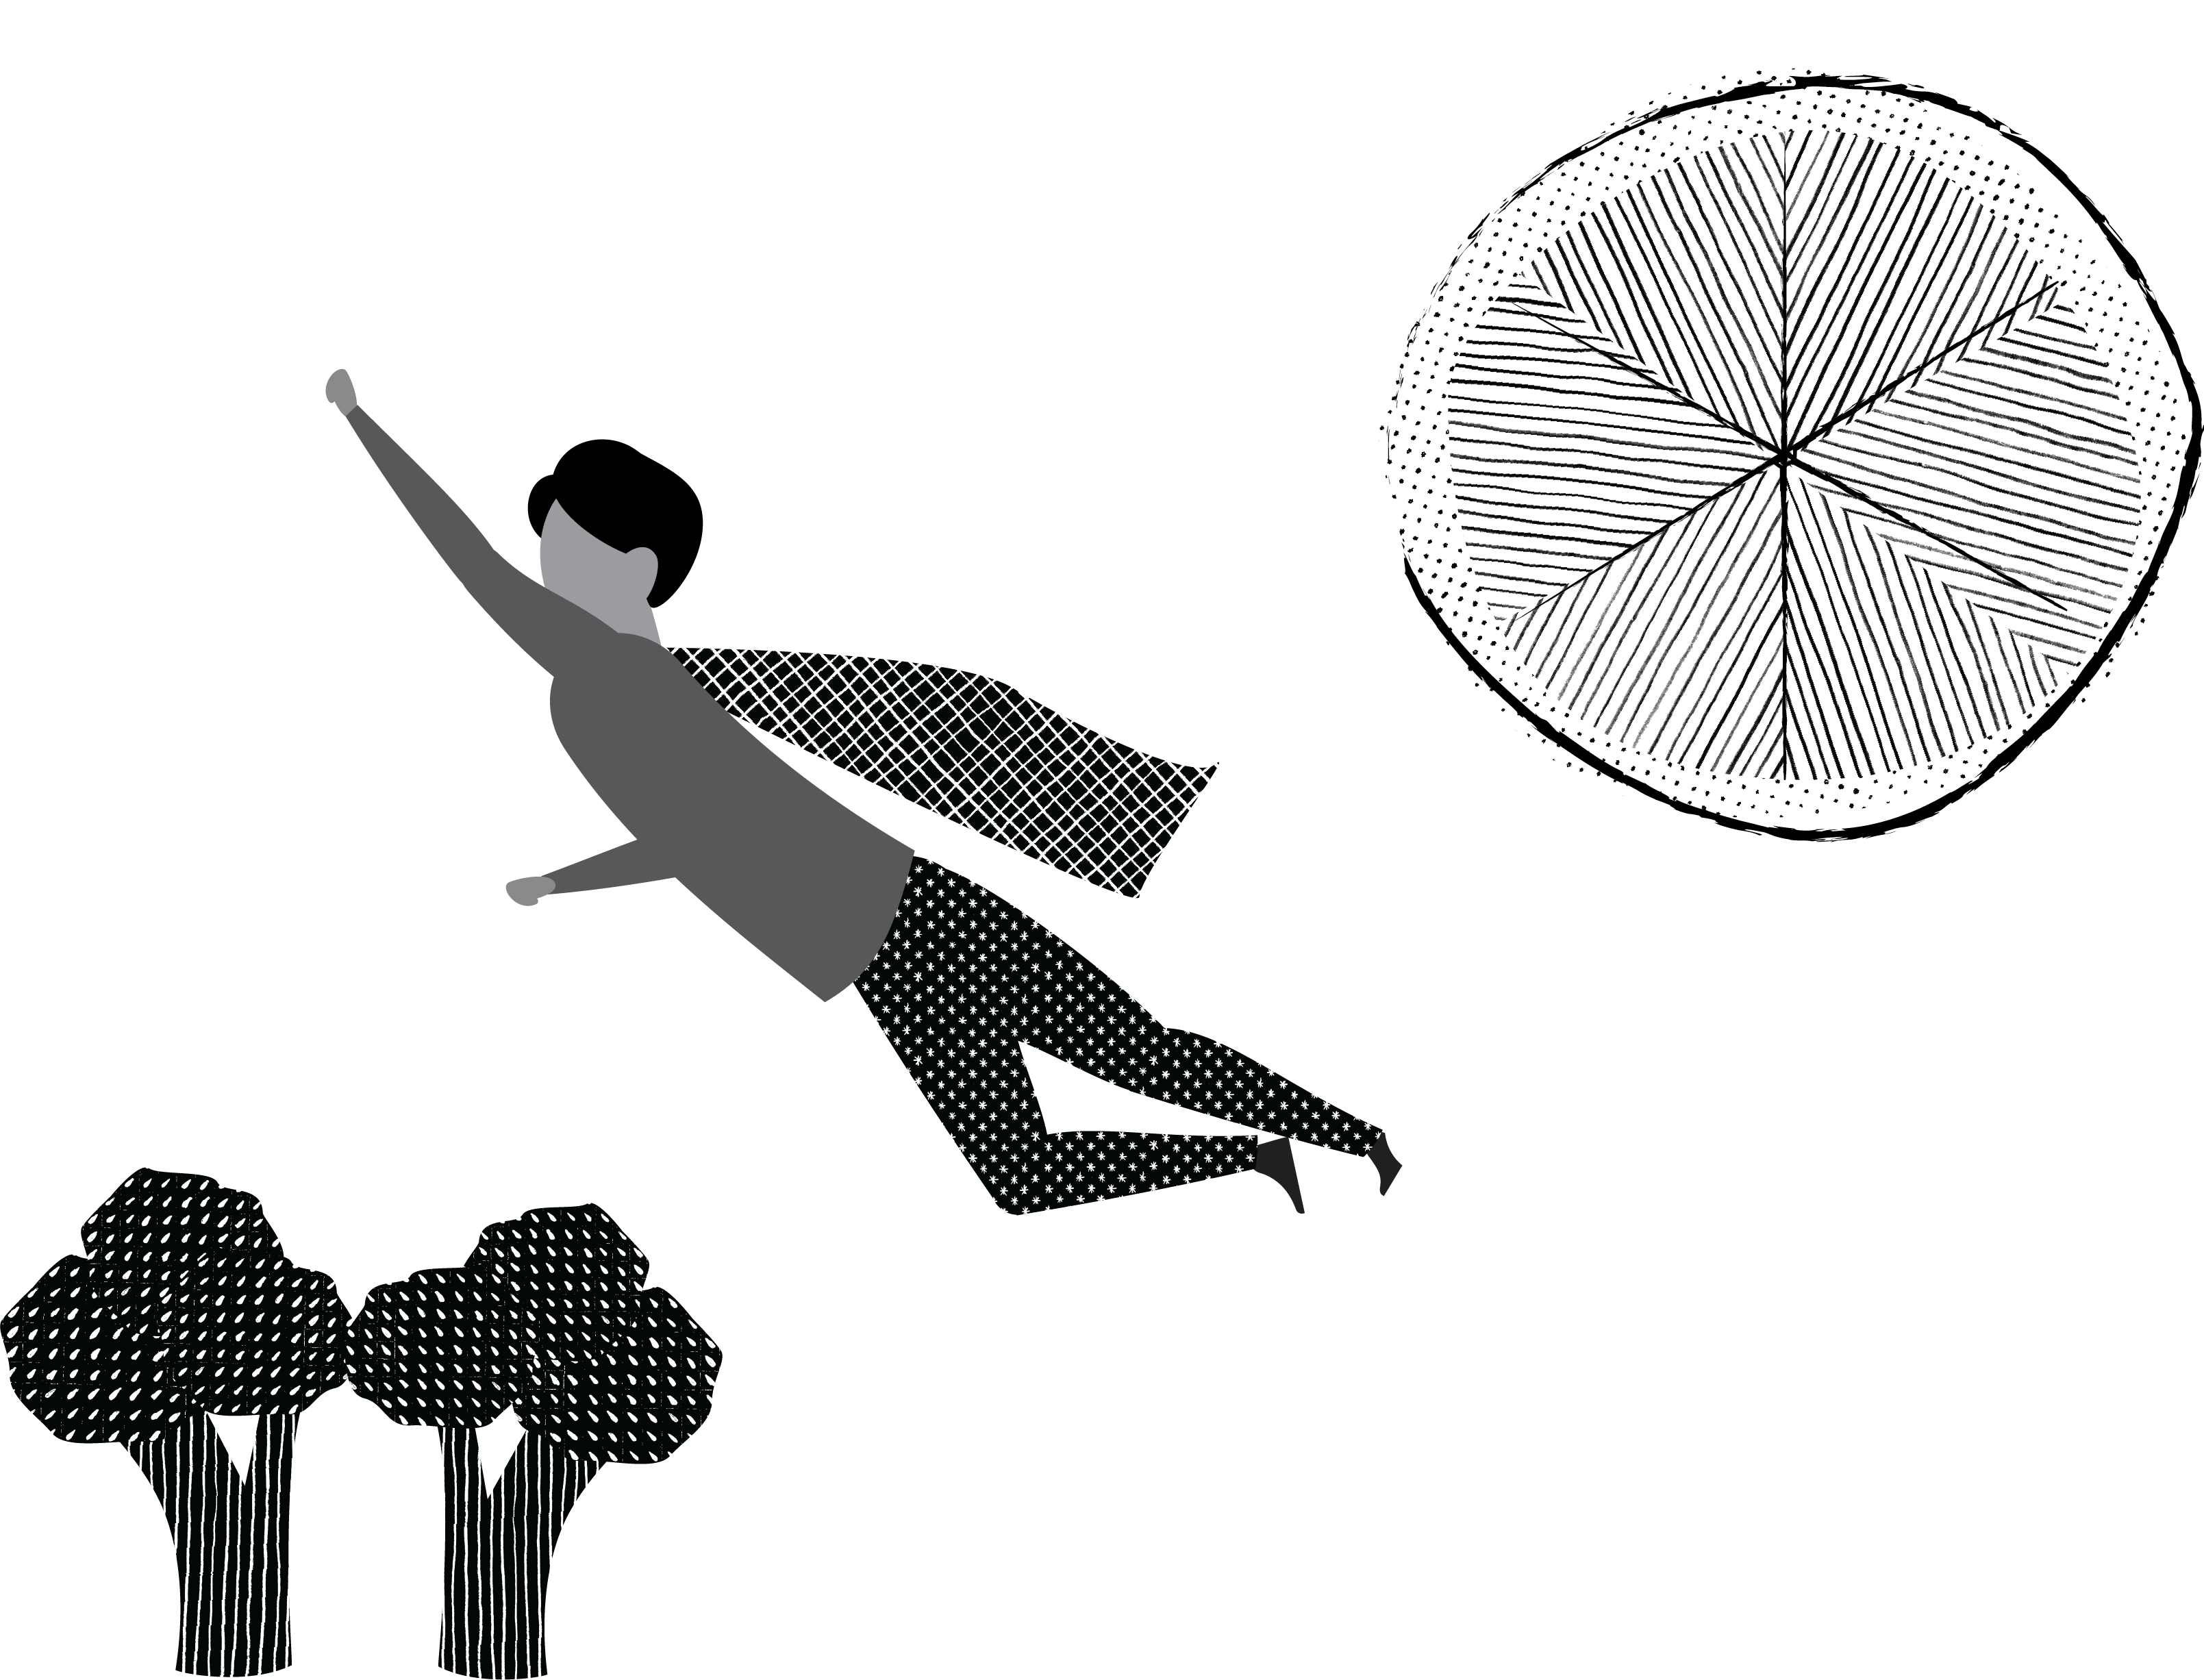 Superhero child soars over backdrop of broccoli trees and citrus sun